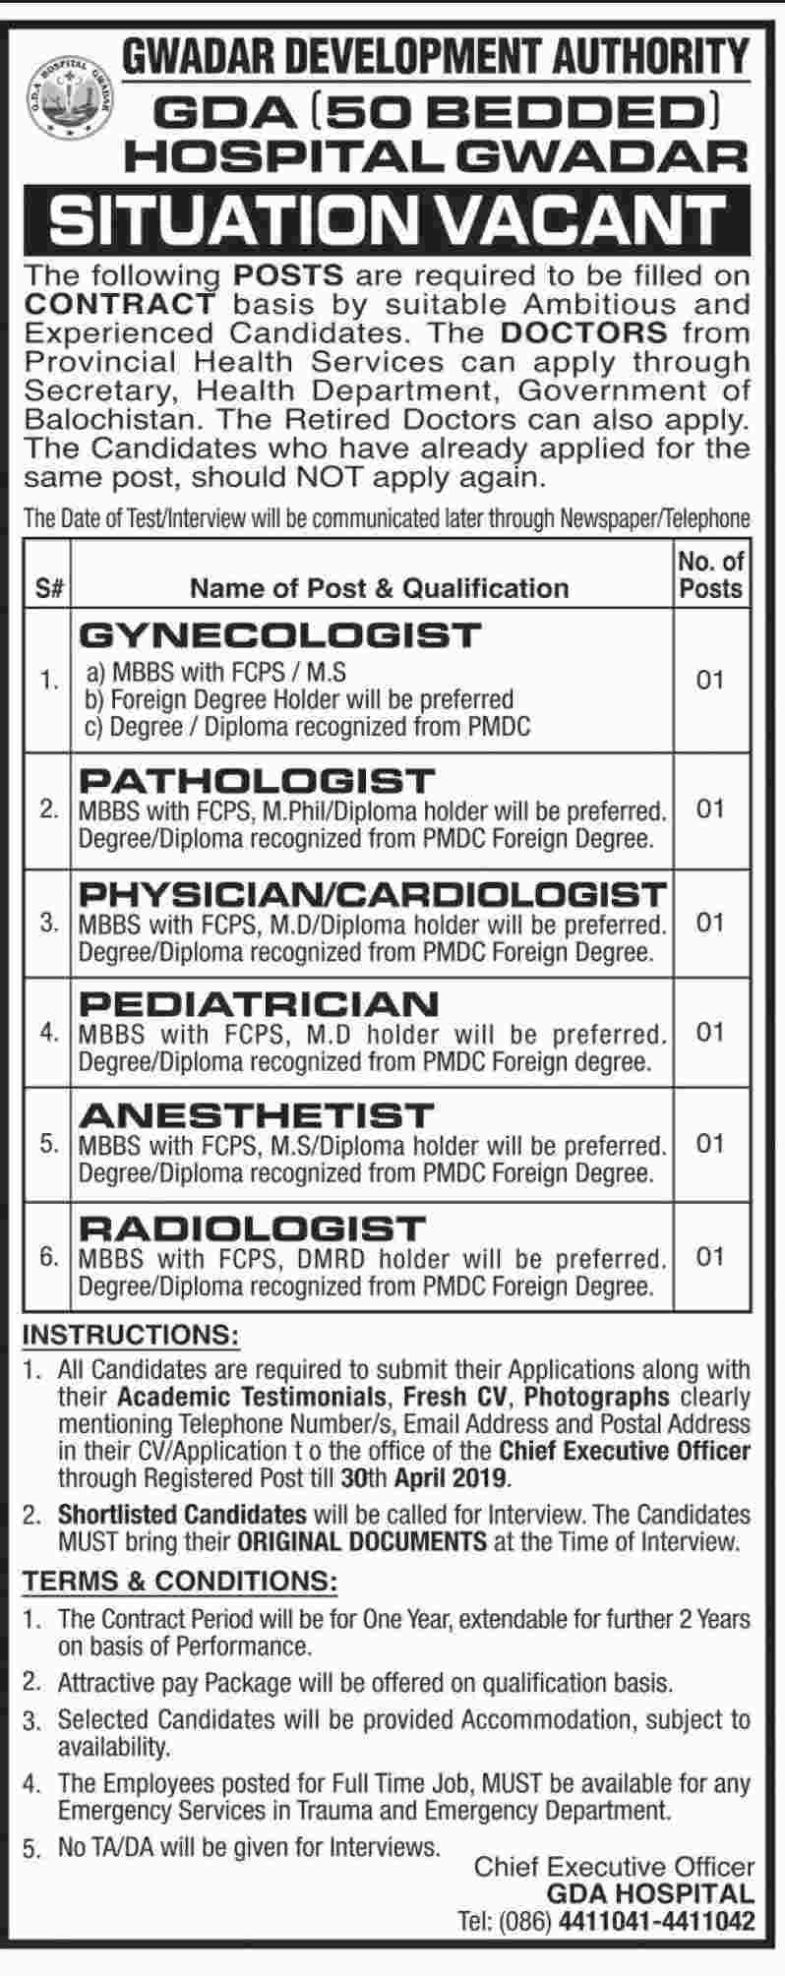 Gwadar Development Authority (GDA) Hospital Jobs 2019 for Various Medical Posts